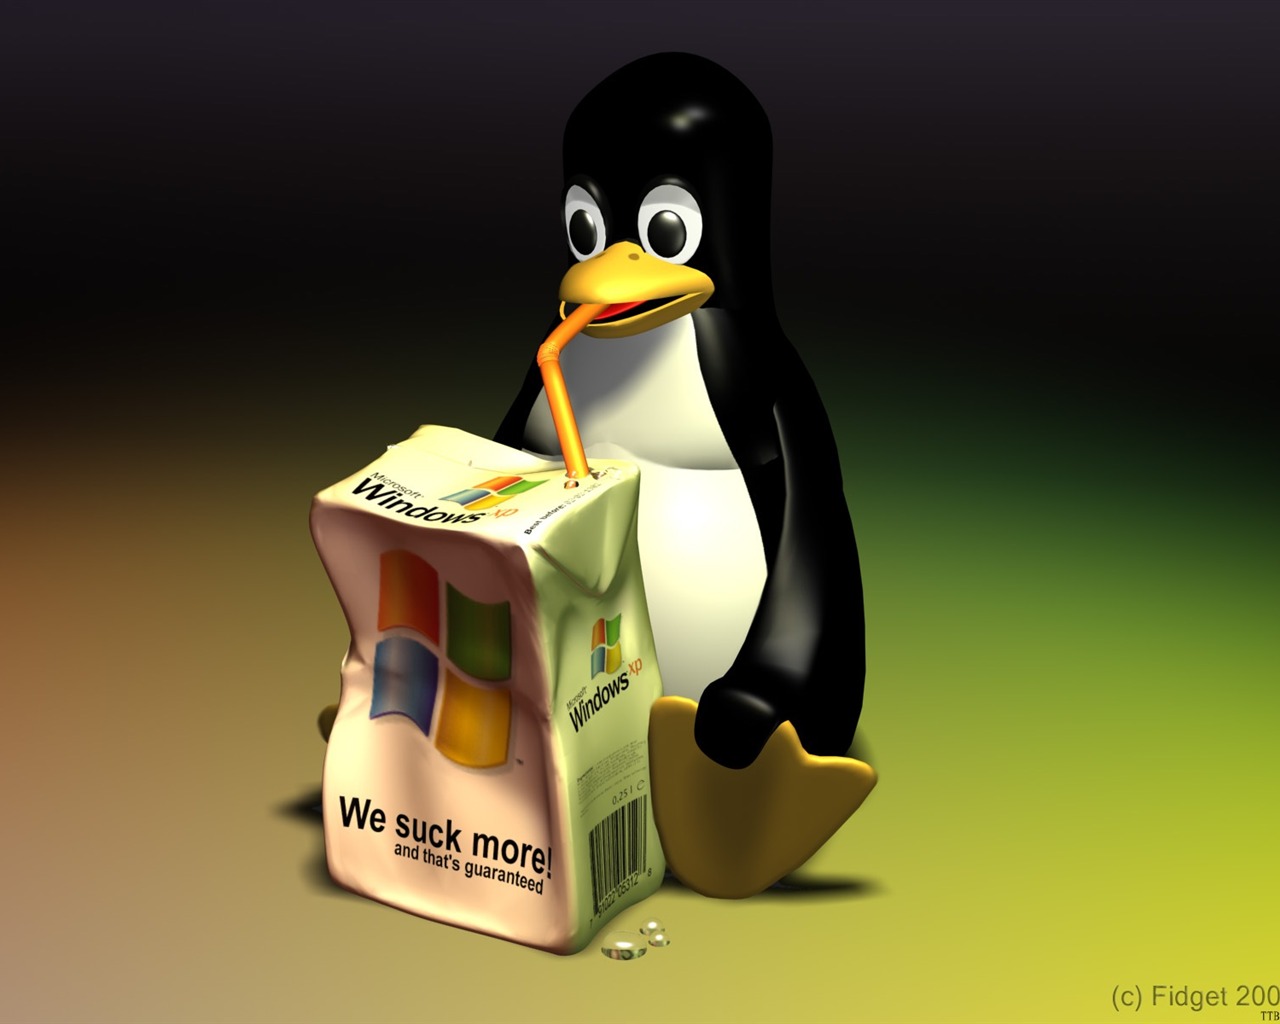 Linux 主题壁纸(一)7 - 1280x1024